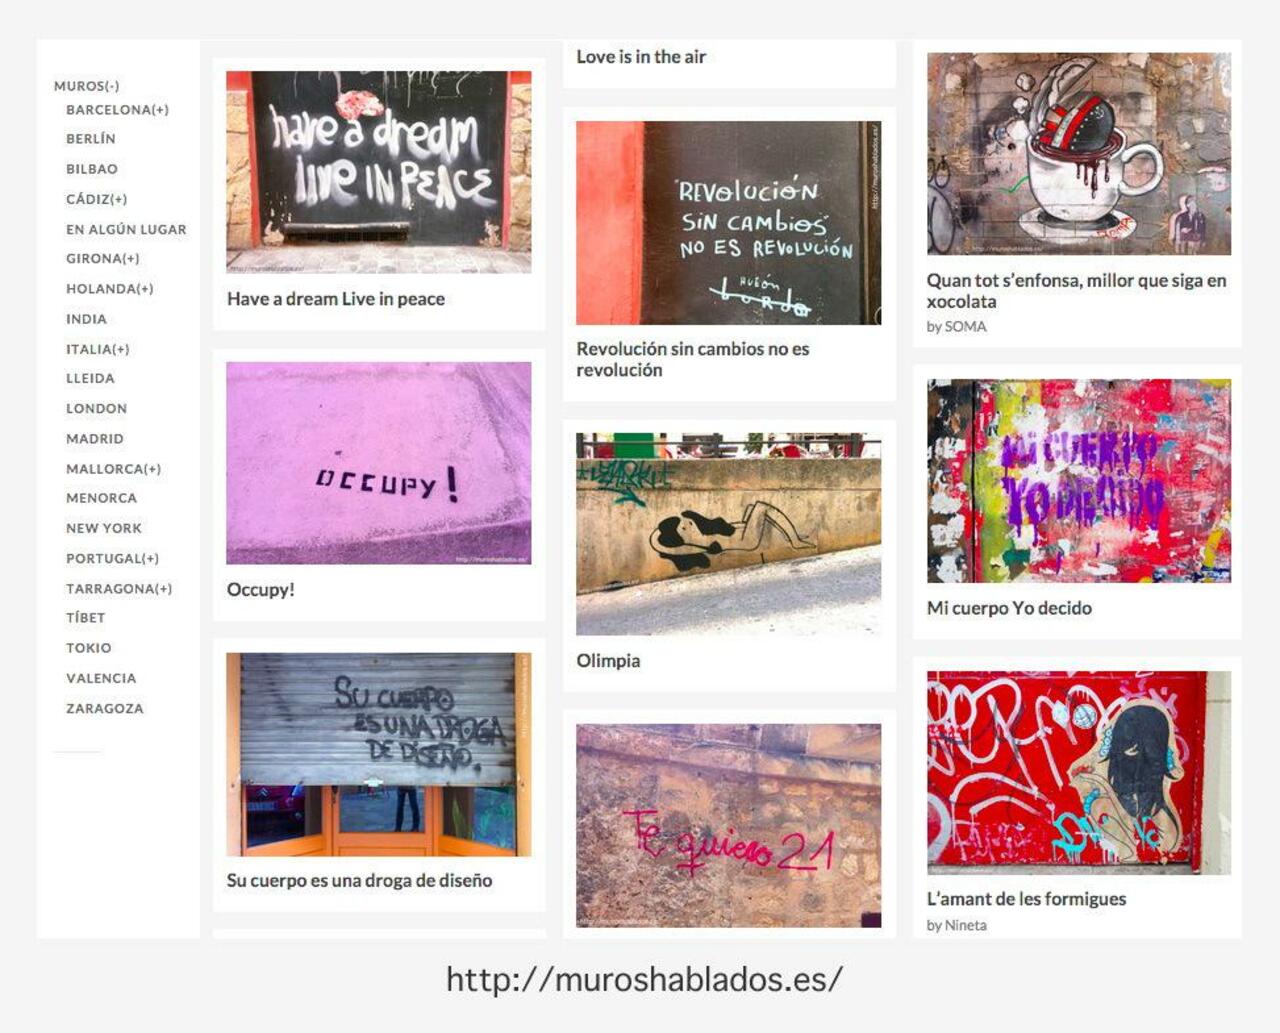 RT @muroshablados: Más de 2.500 #muroshablados publicados, de allá a donde voy :D
http://muroshablados.es/archives/category/muros
#graffiti #streetart #urbanart http://t.co/27uKE0Z0qL